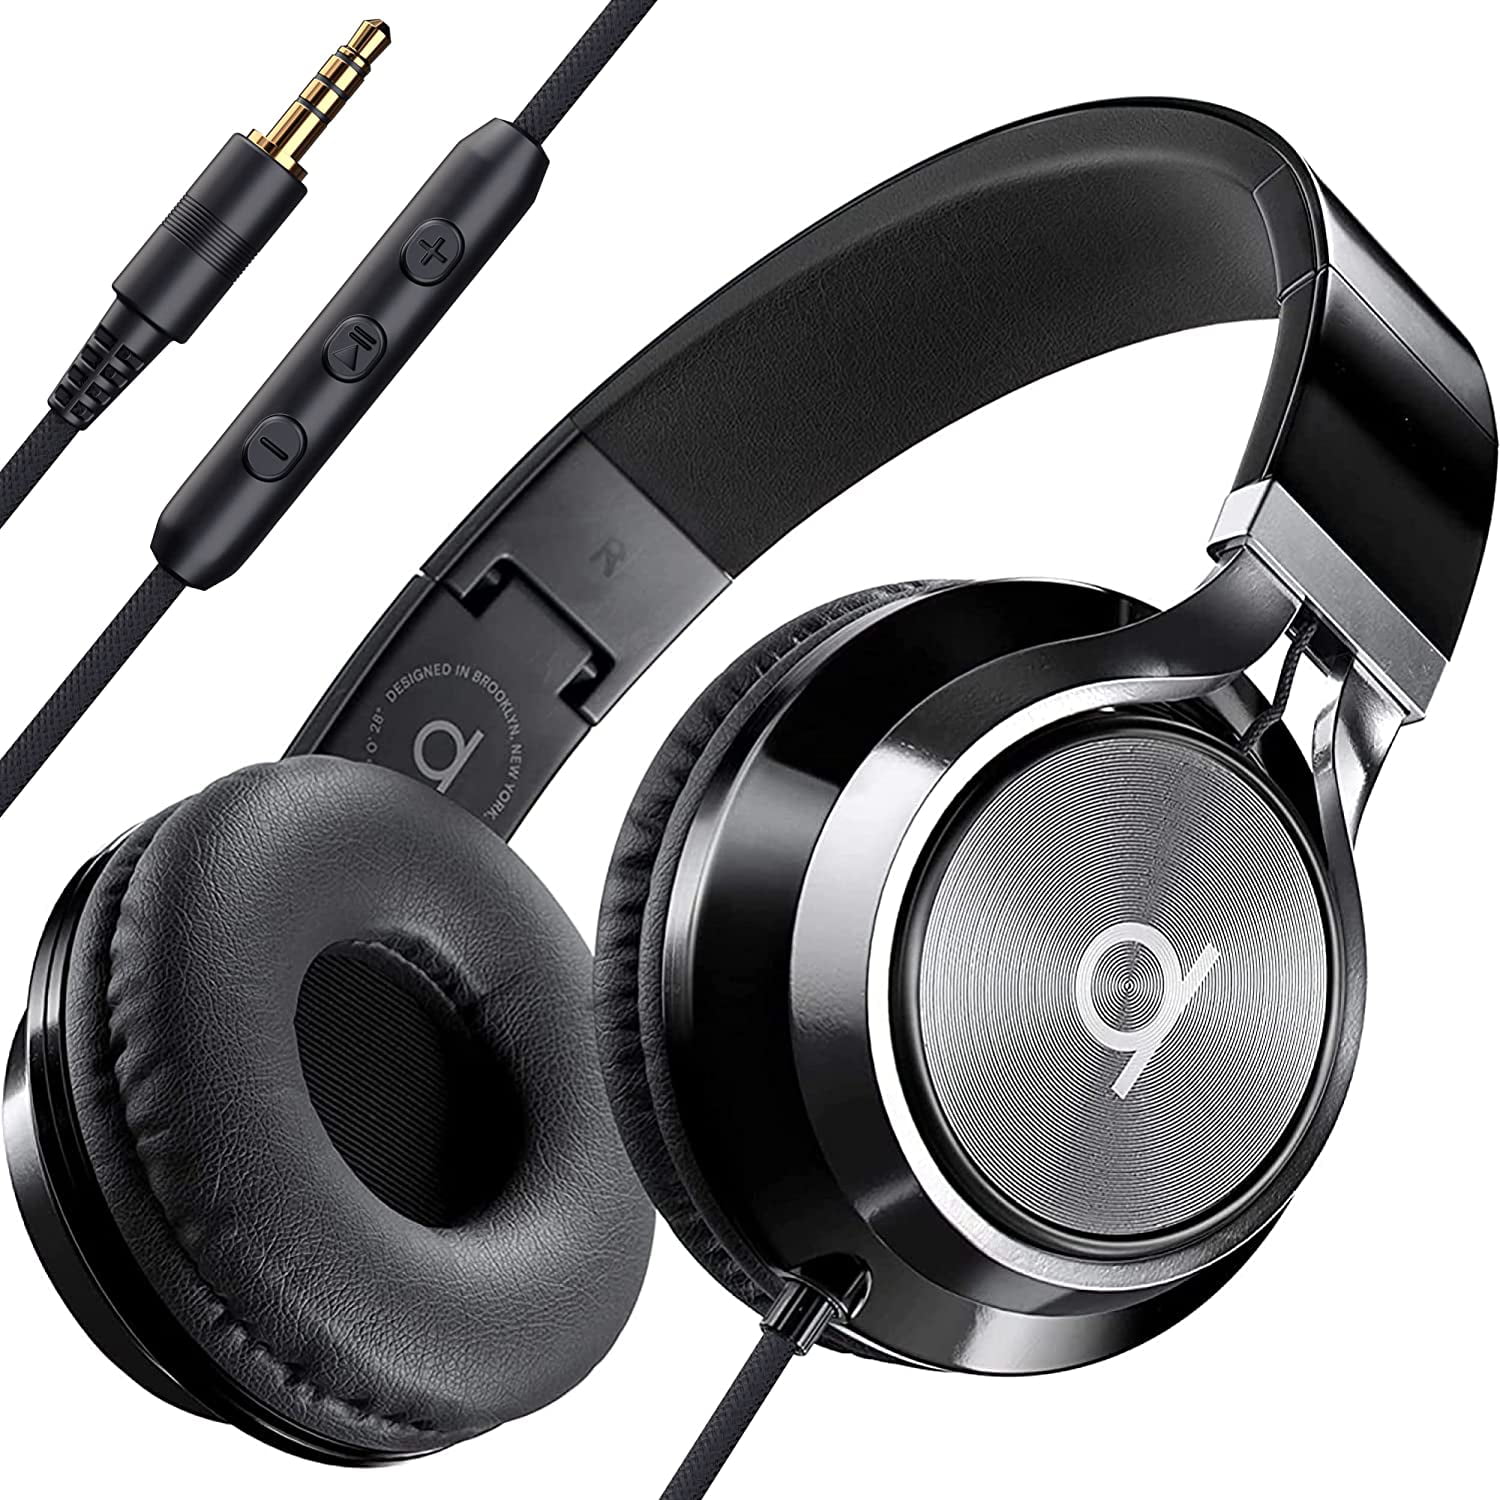 Artix CL750 On-Ear Headphones with Microphone, Black